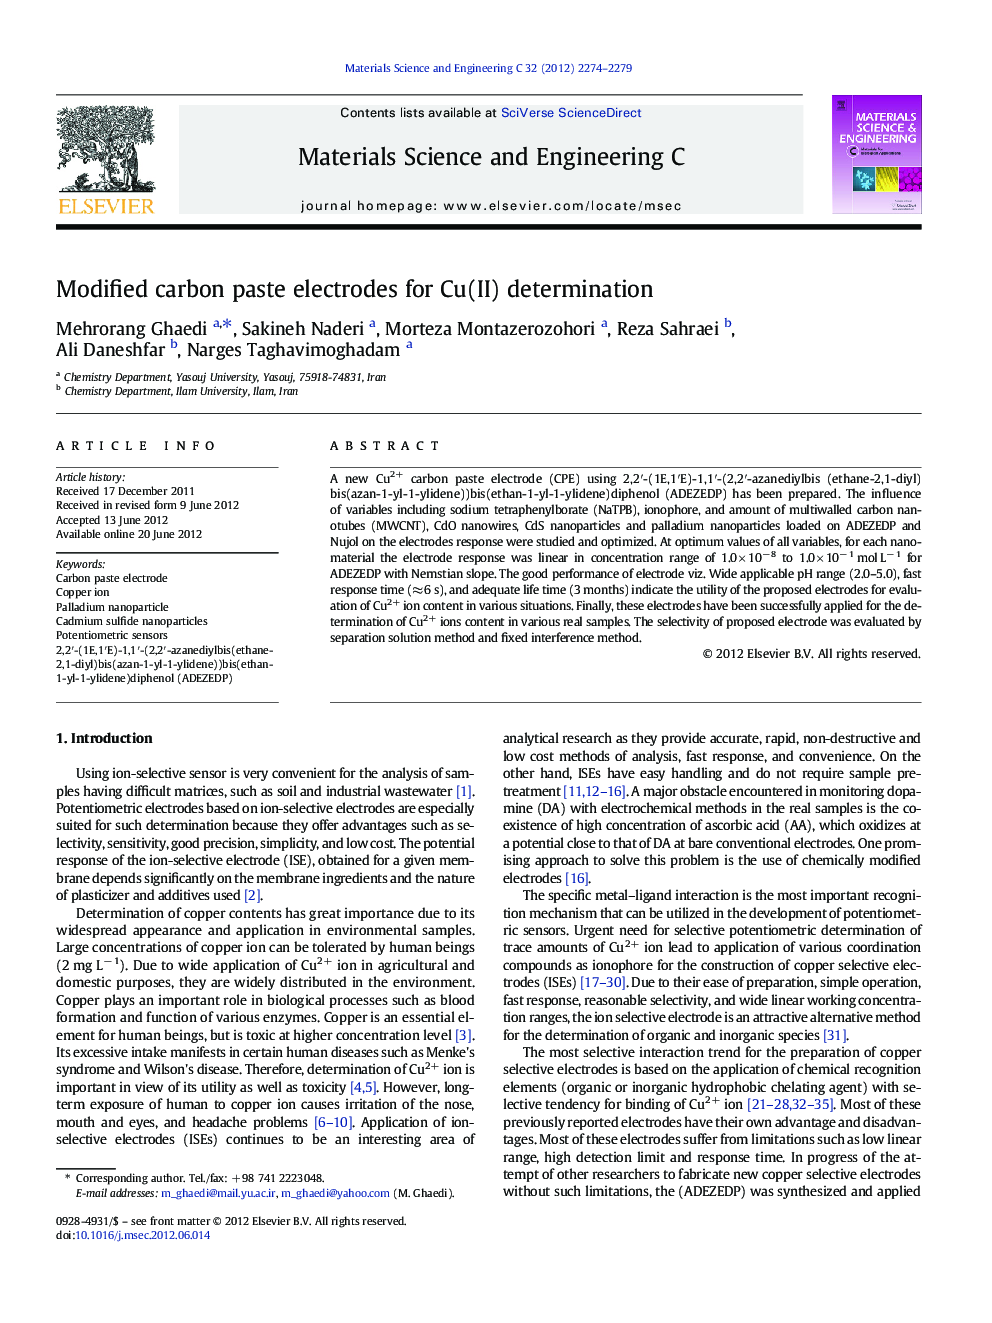 Modified carbon paste electrodes for Cu(II) determination